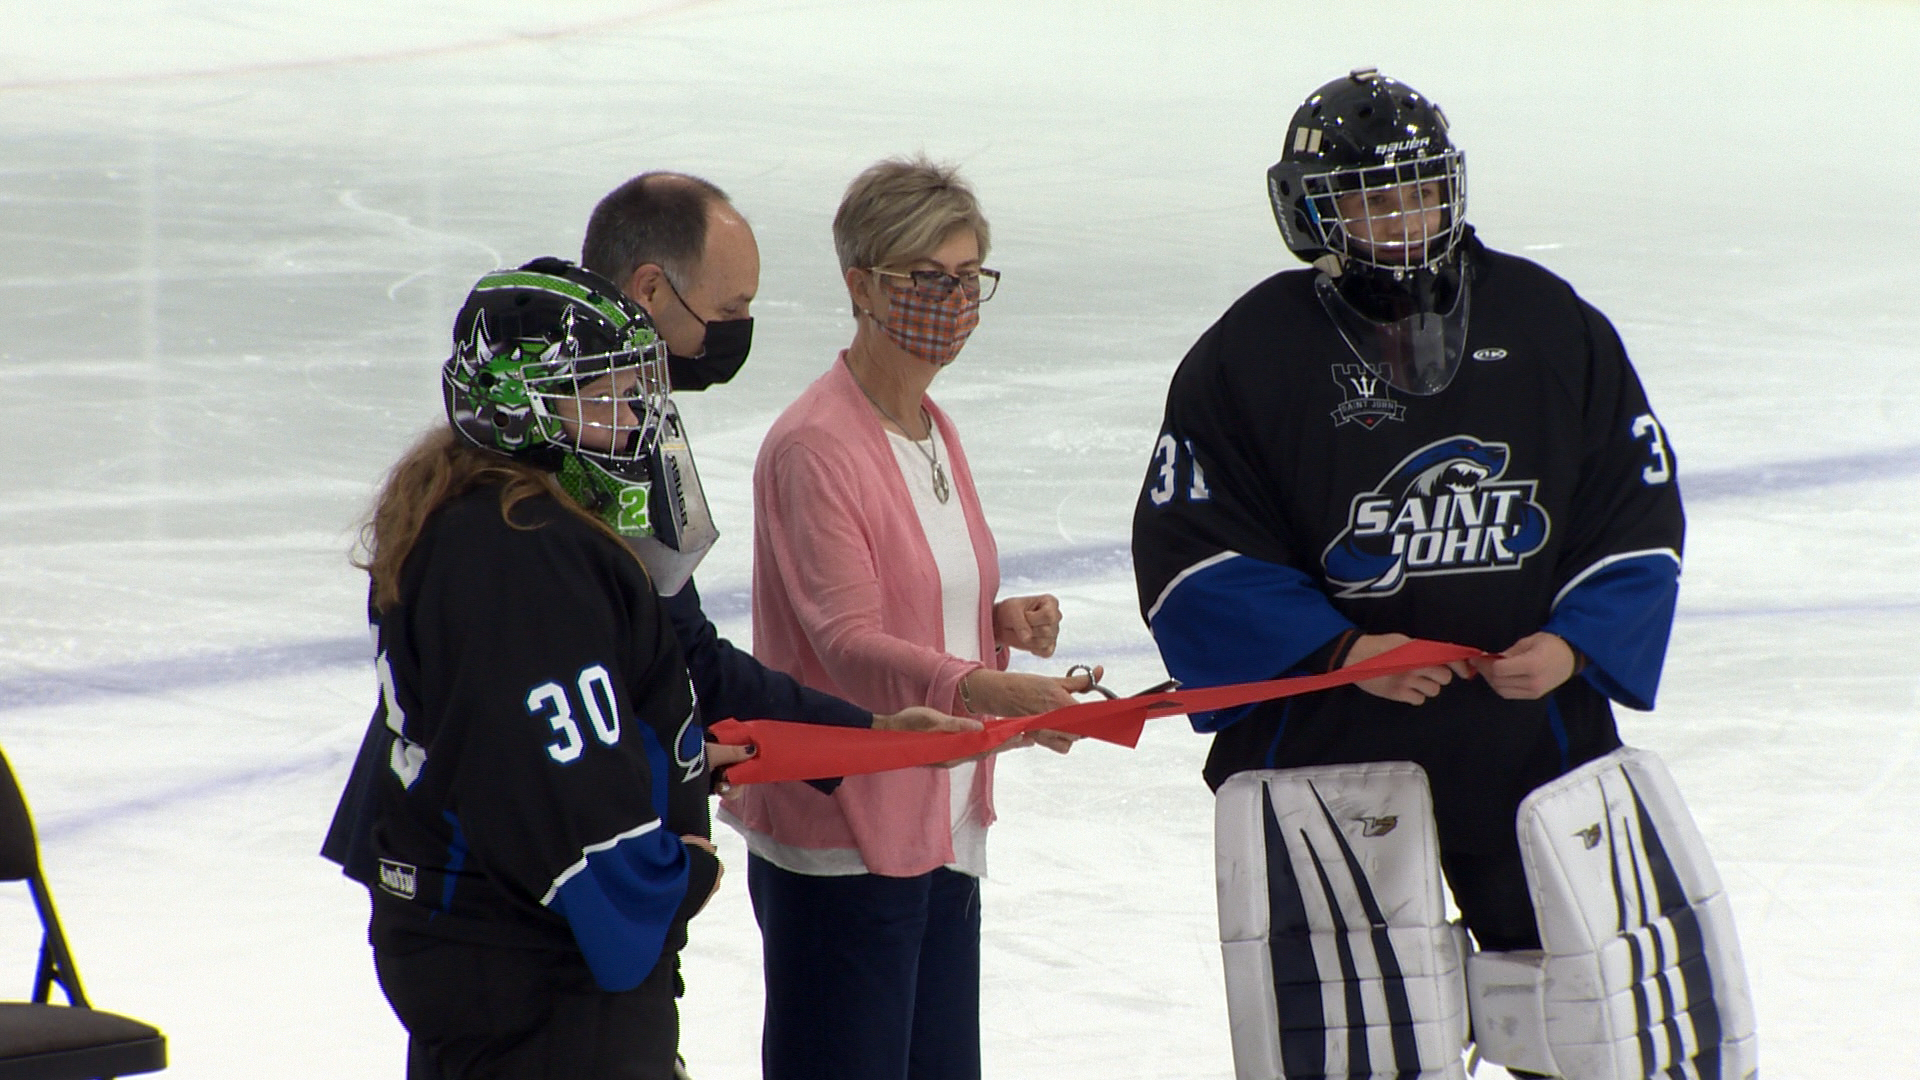 Saint John giving kids free hockey ice time this summer